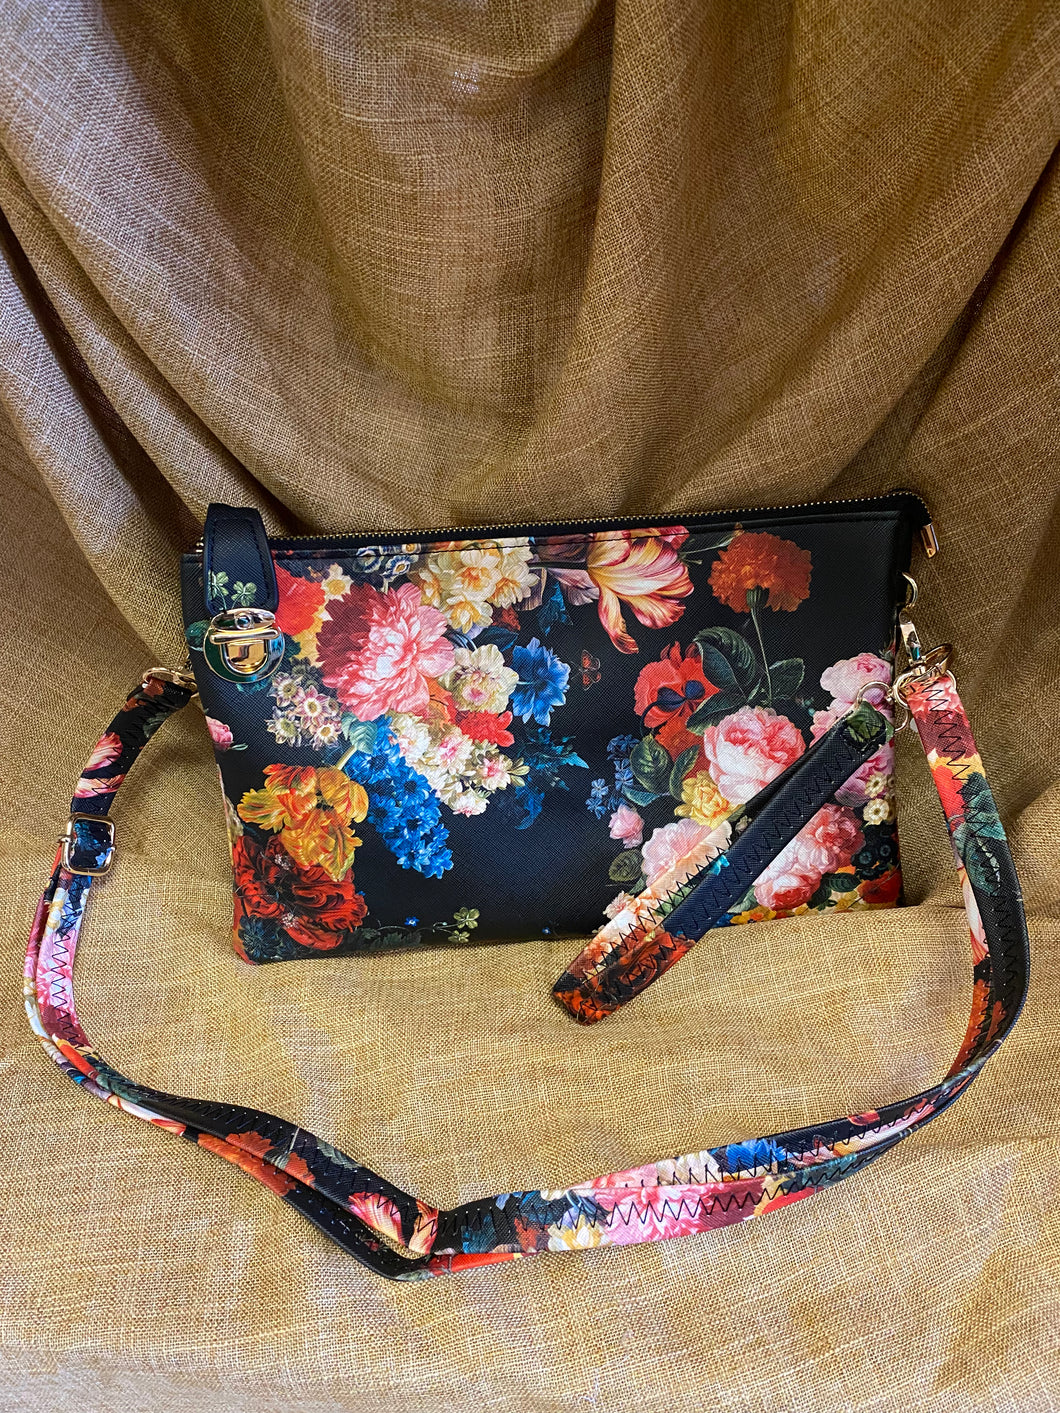 Romantic Floral Handbag and Wrsitlet